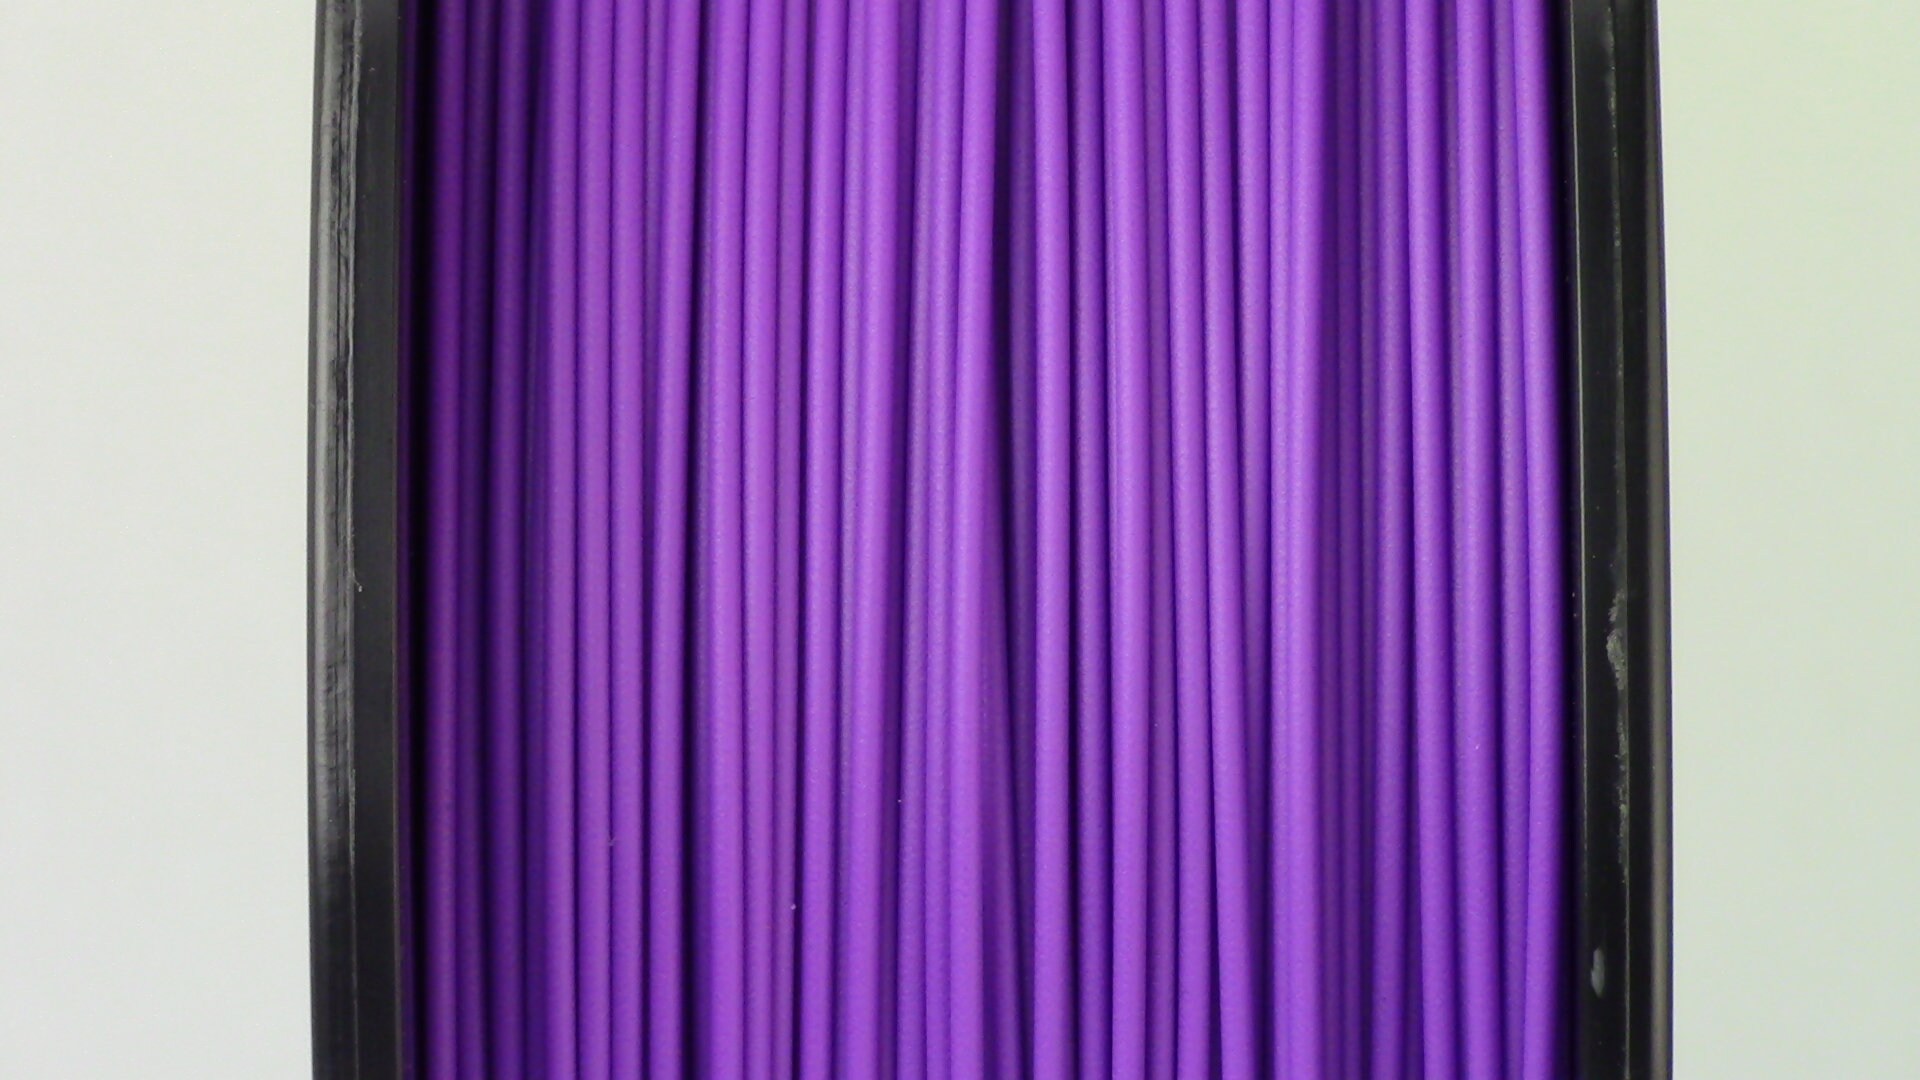 3D Printer Magic Heat Colour Change Filament Purple to Orangey Pink  ABS PLA 